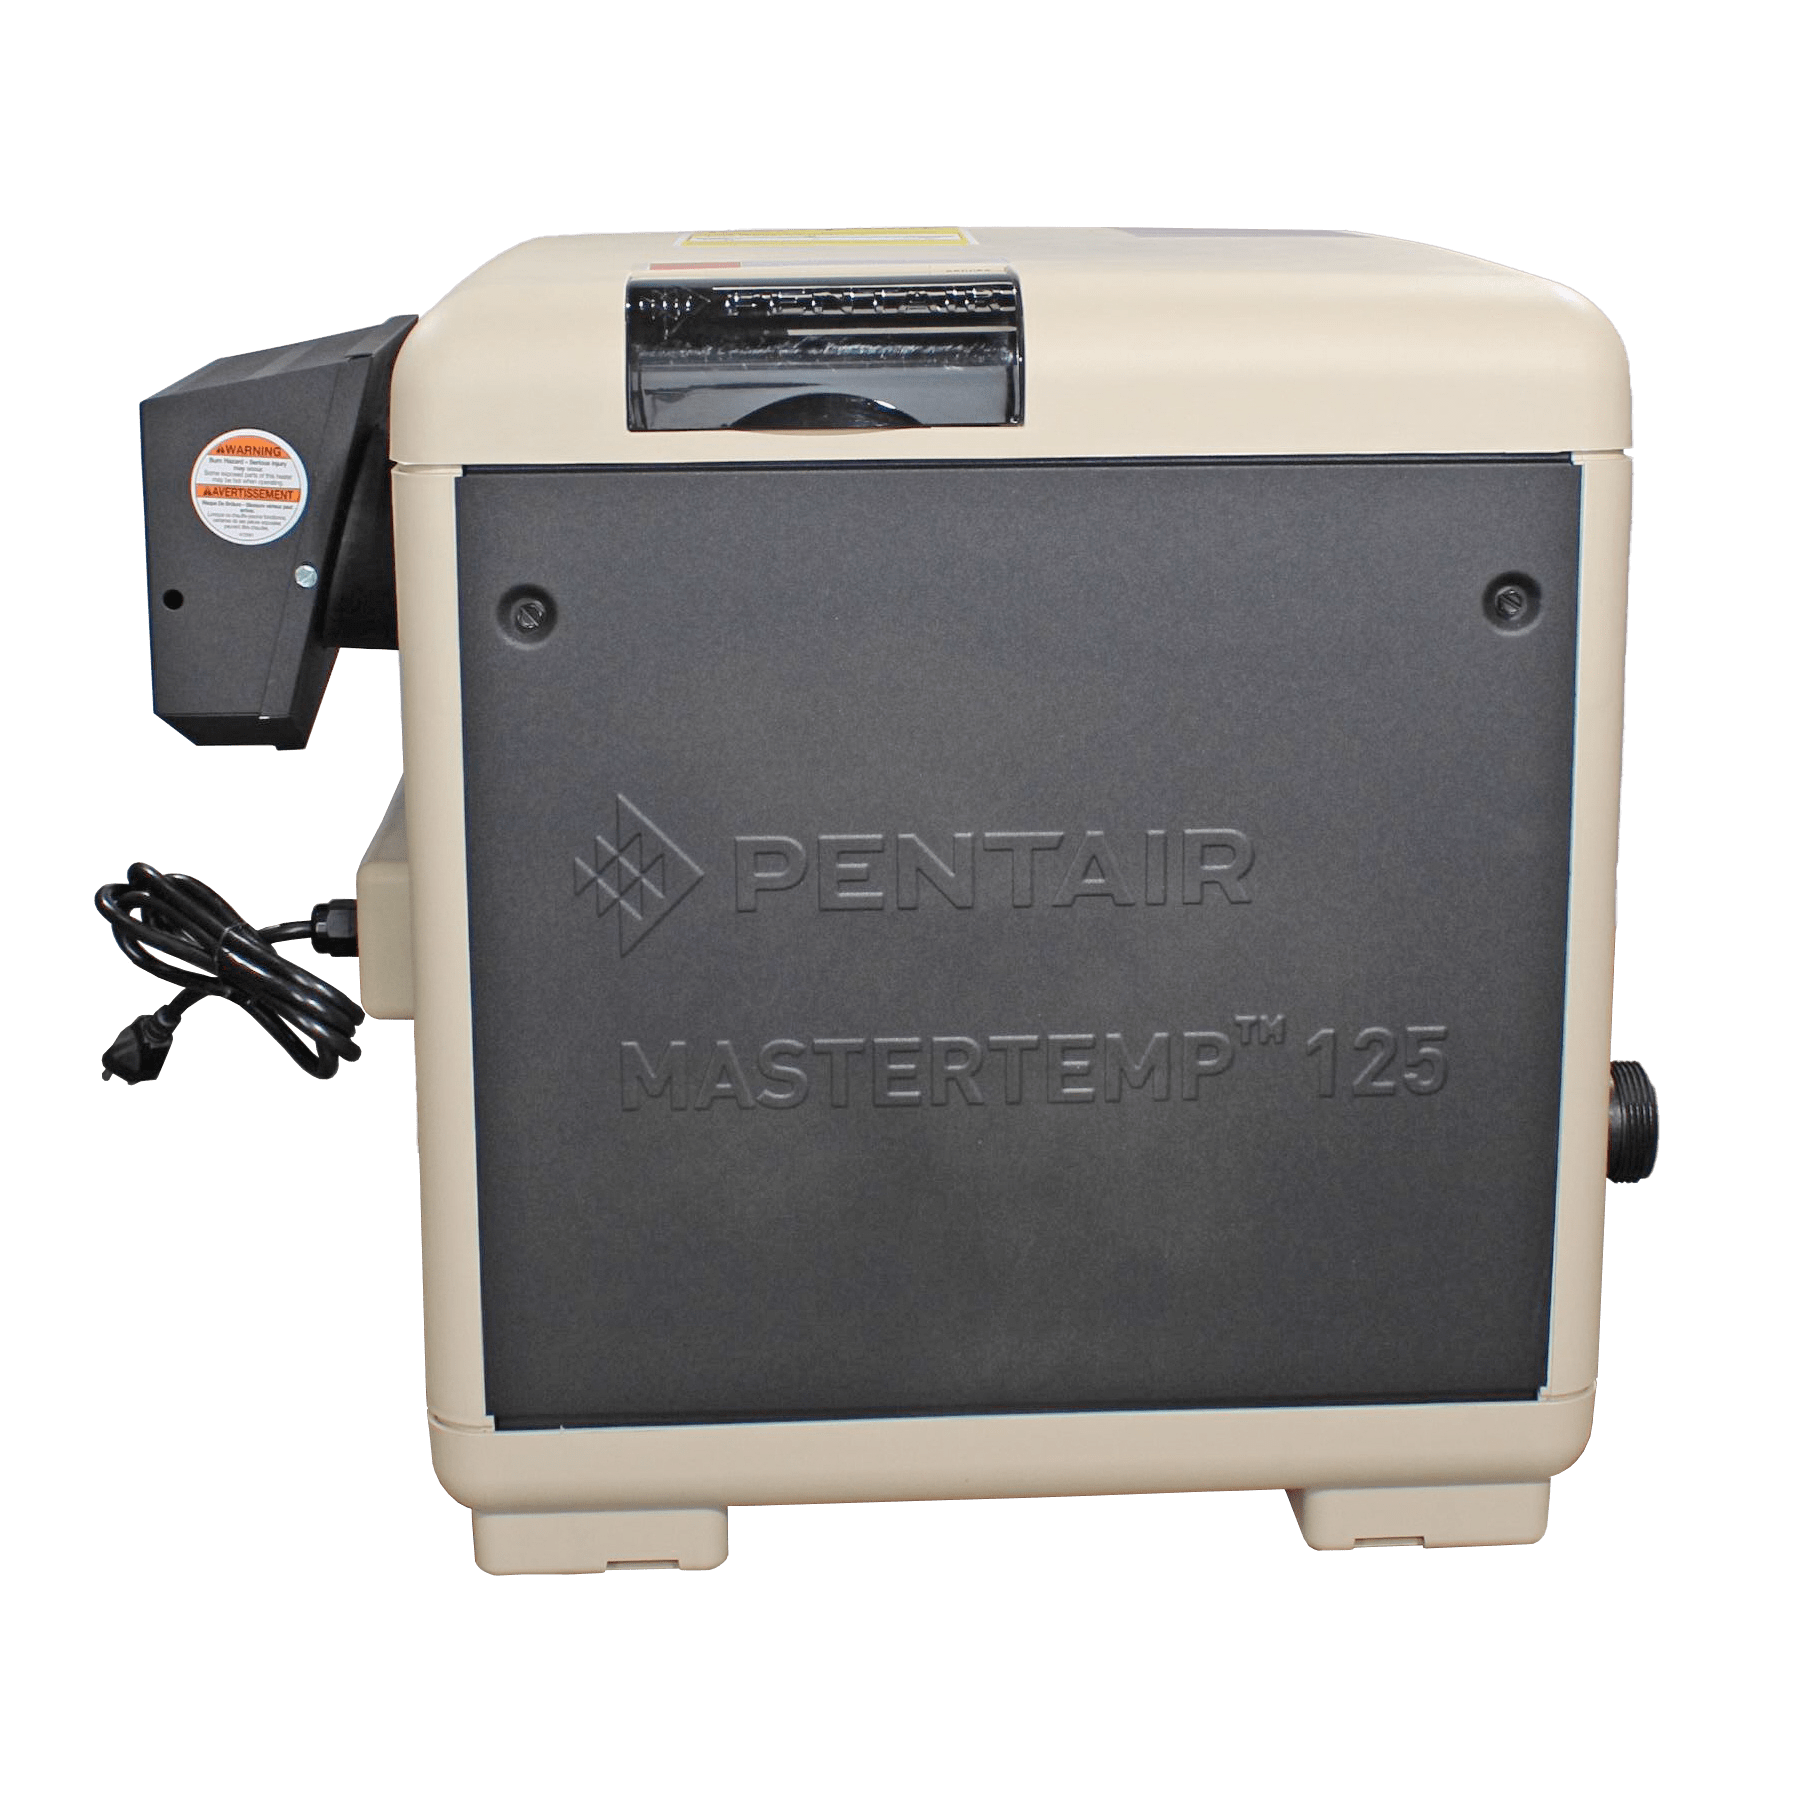 Pentair EC-462025 MasterTemp 125k BTU Above Ground Pool Heater w/ Cord - Propane Gas